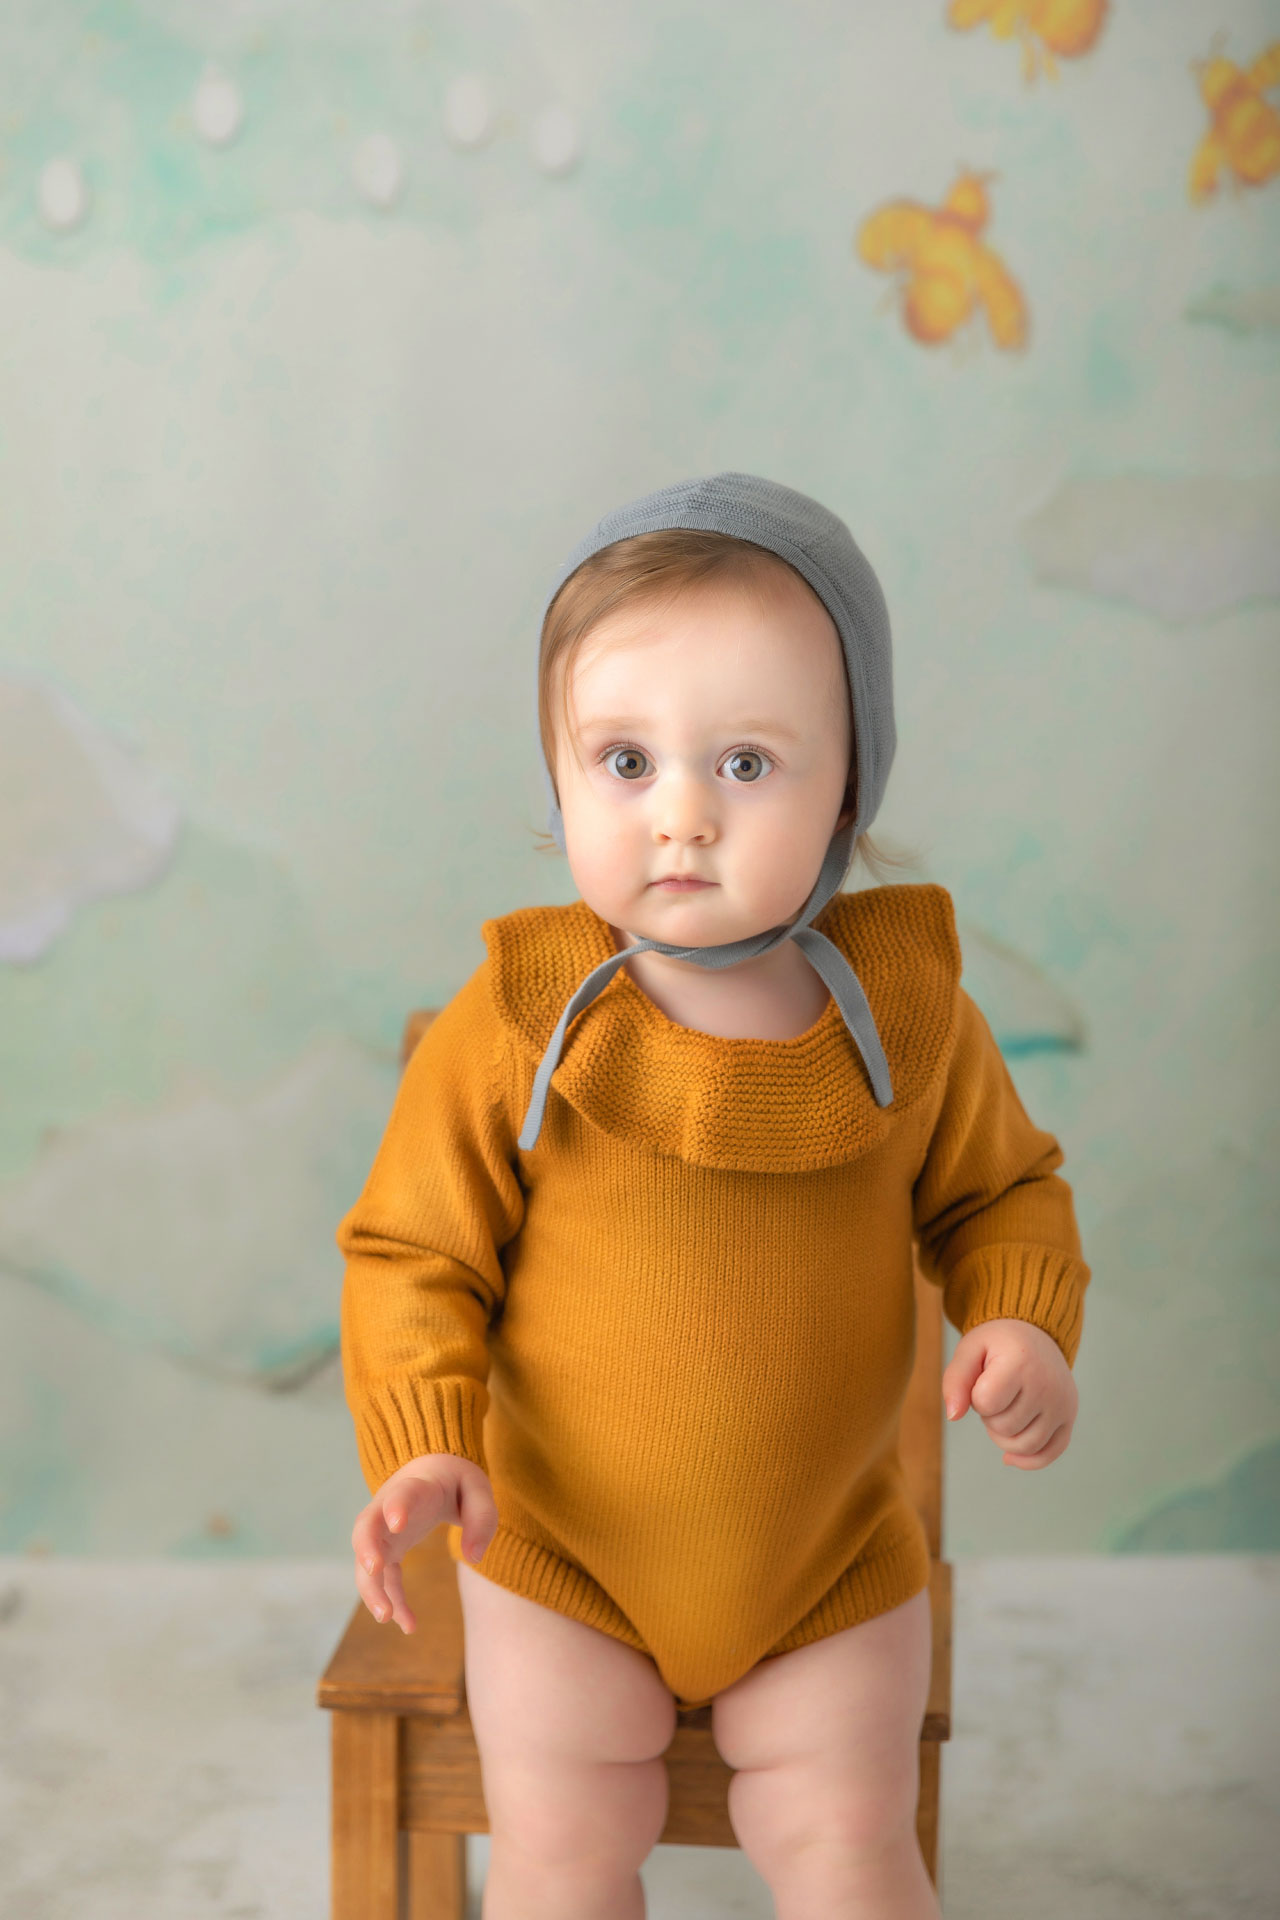 Milestone portrait of toddler in bonnet